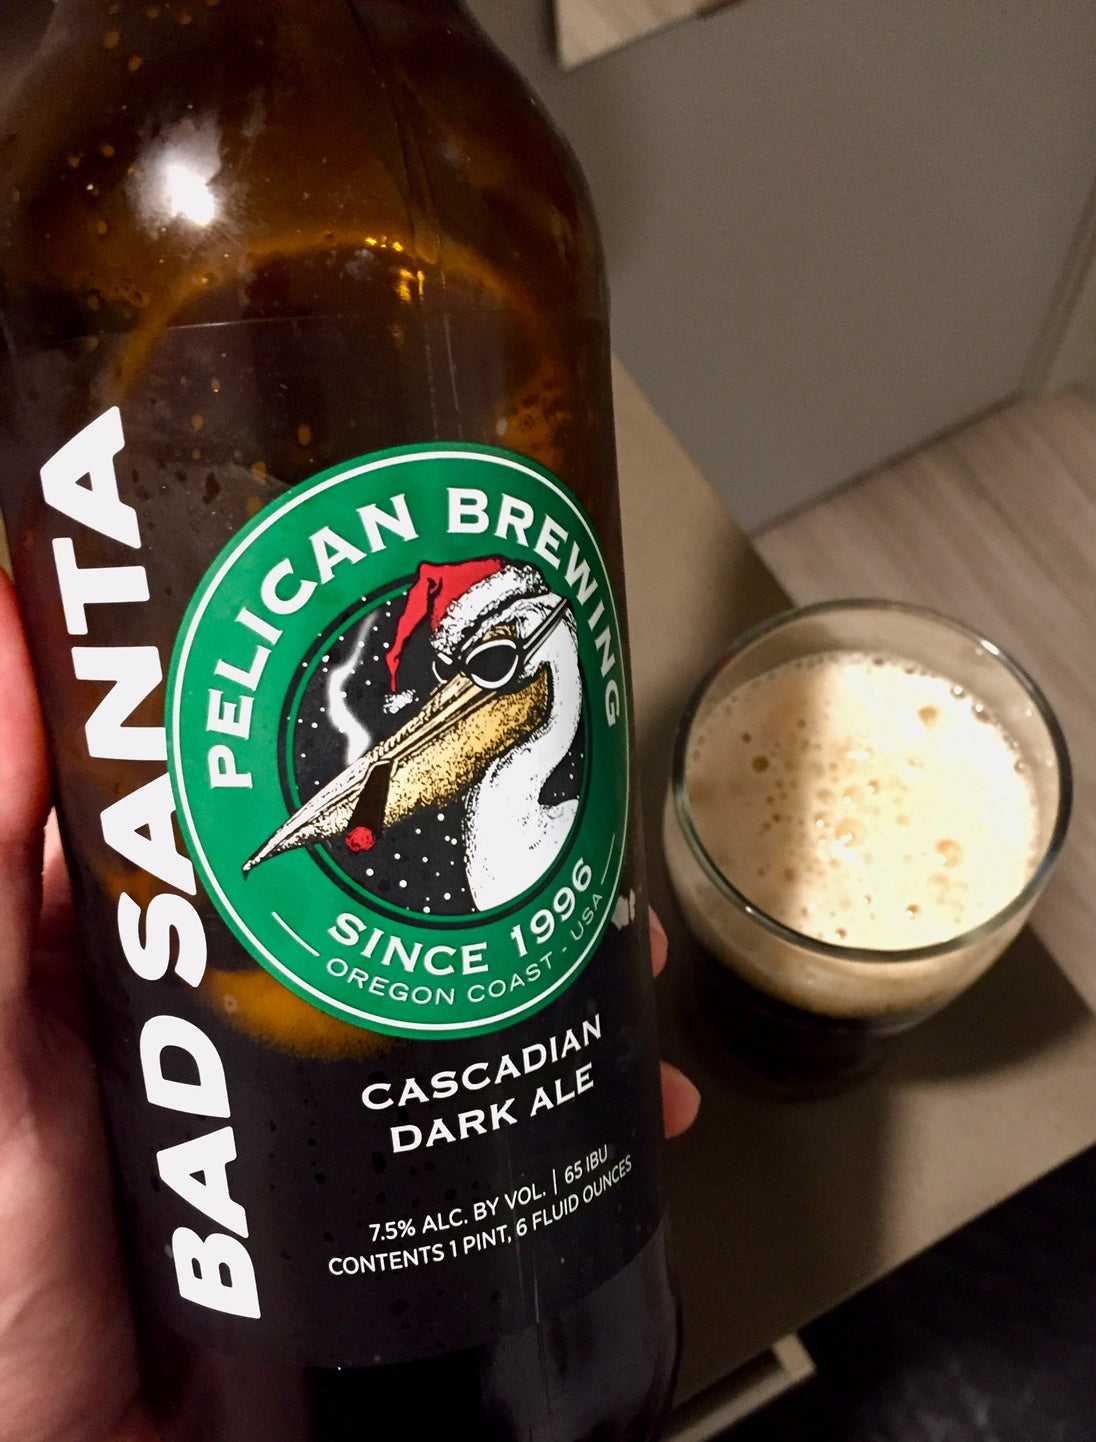 Pelican Brewing Cannon Beach Bad Santa Cascadian Dark Ale Review